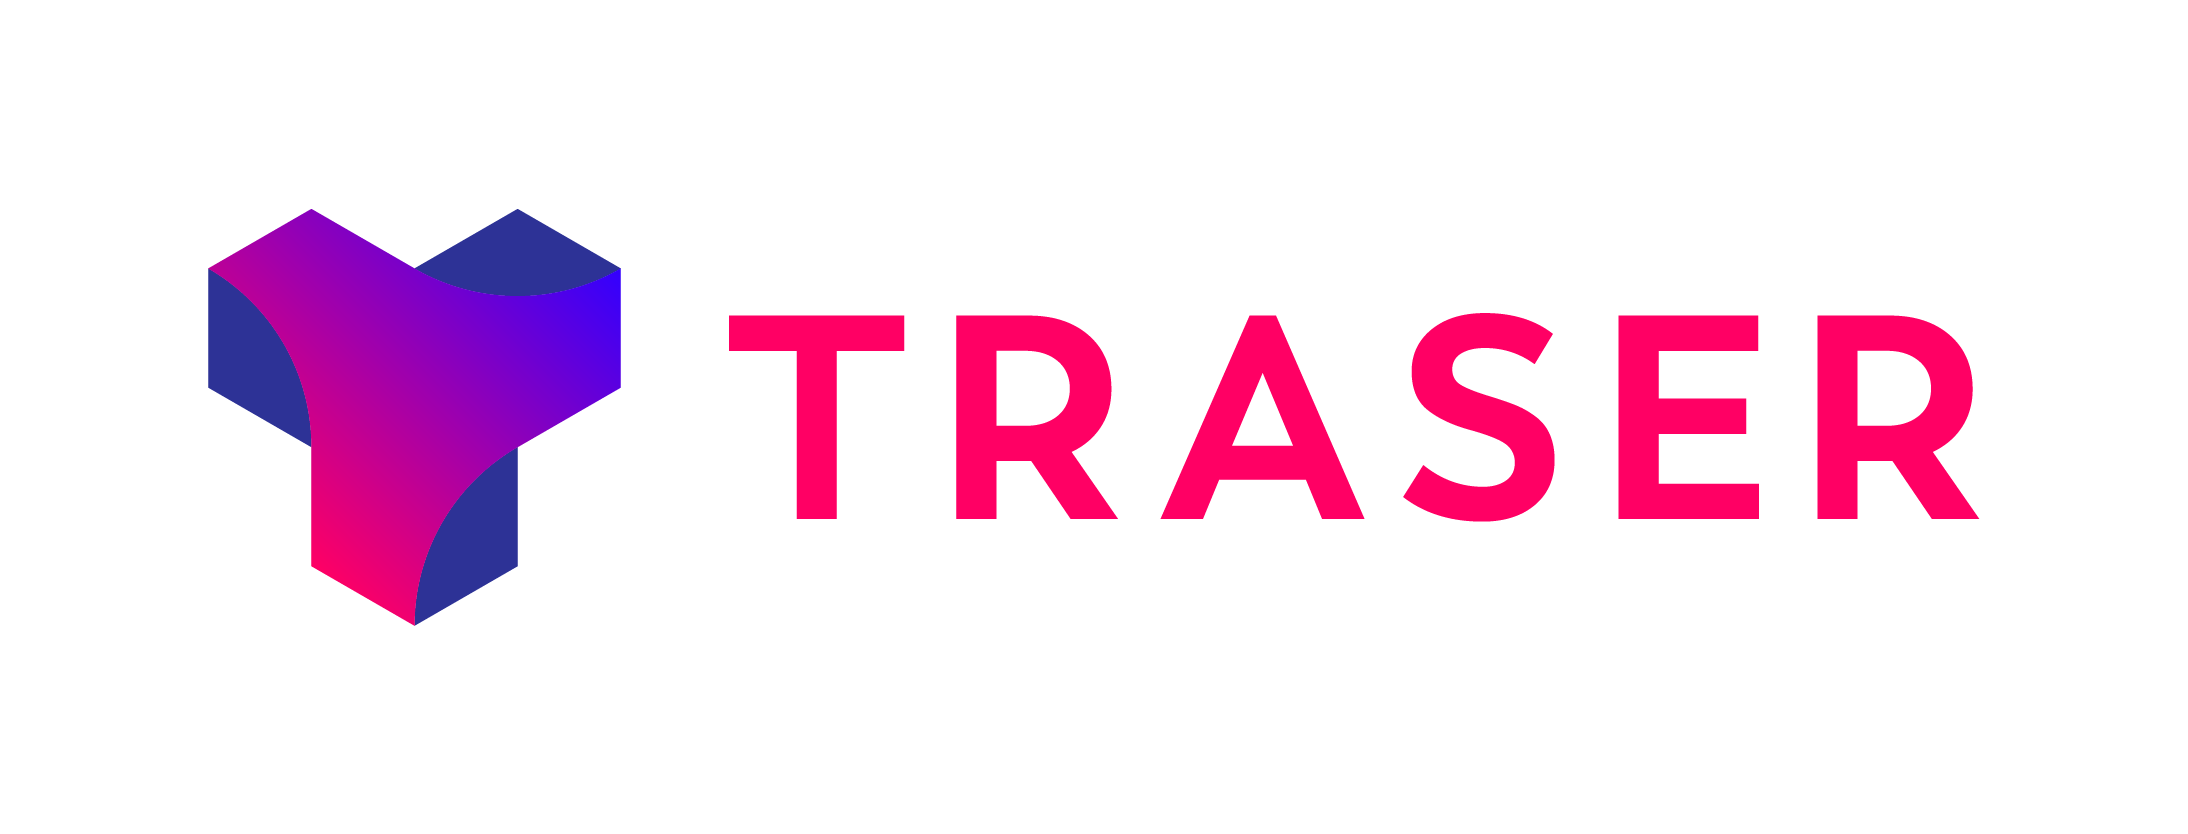 Traser partner logo